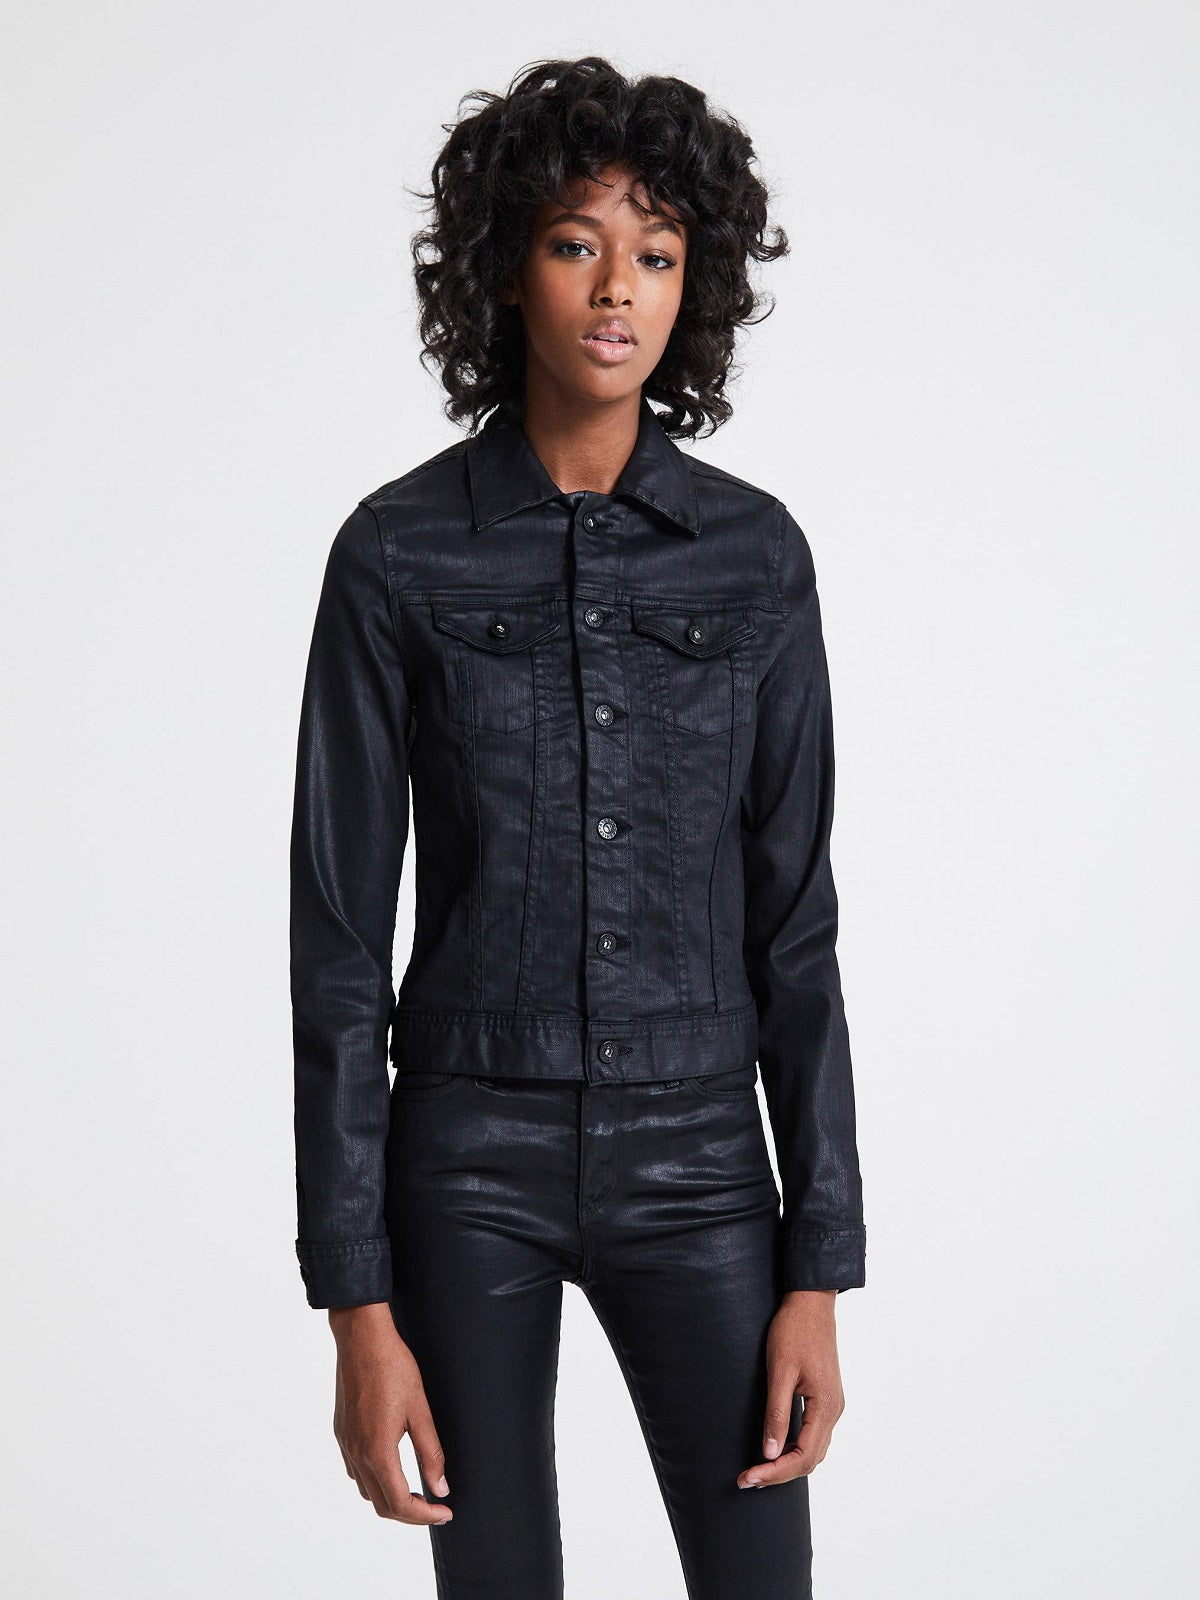 Women Black Button Closer Casual Leather Jacket - LJ.com